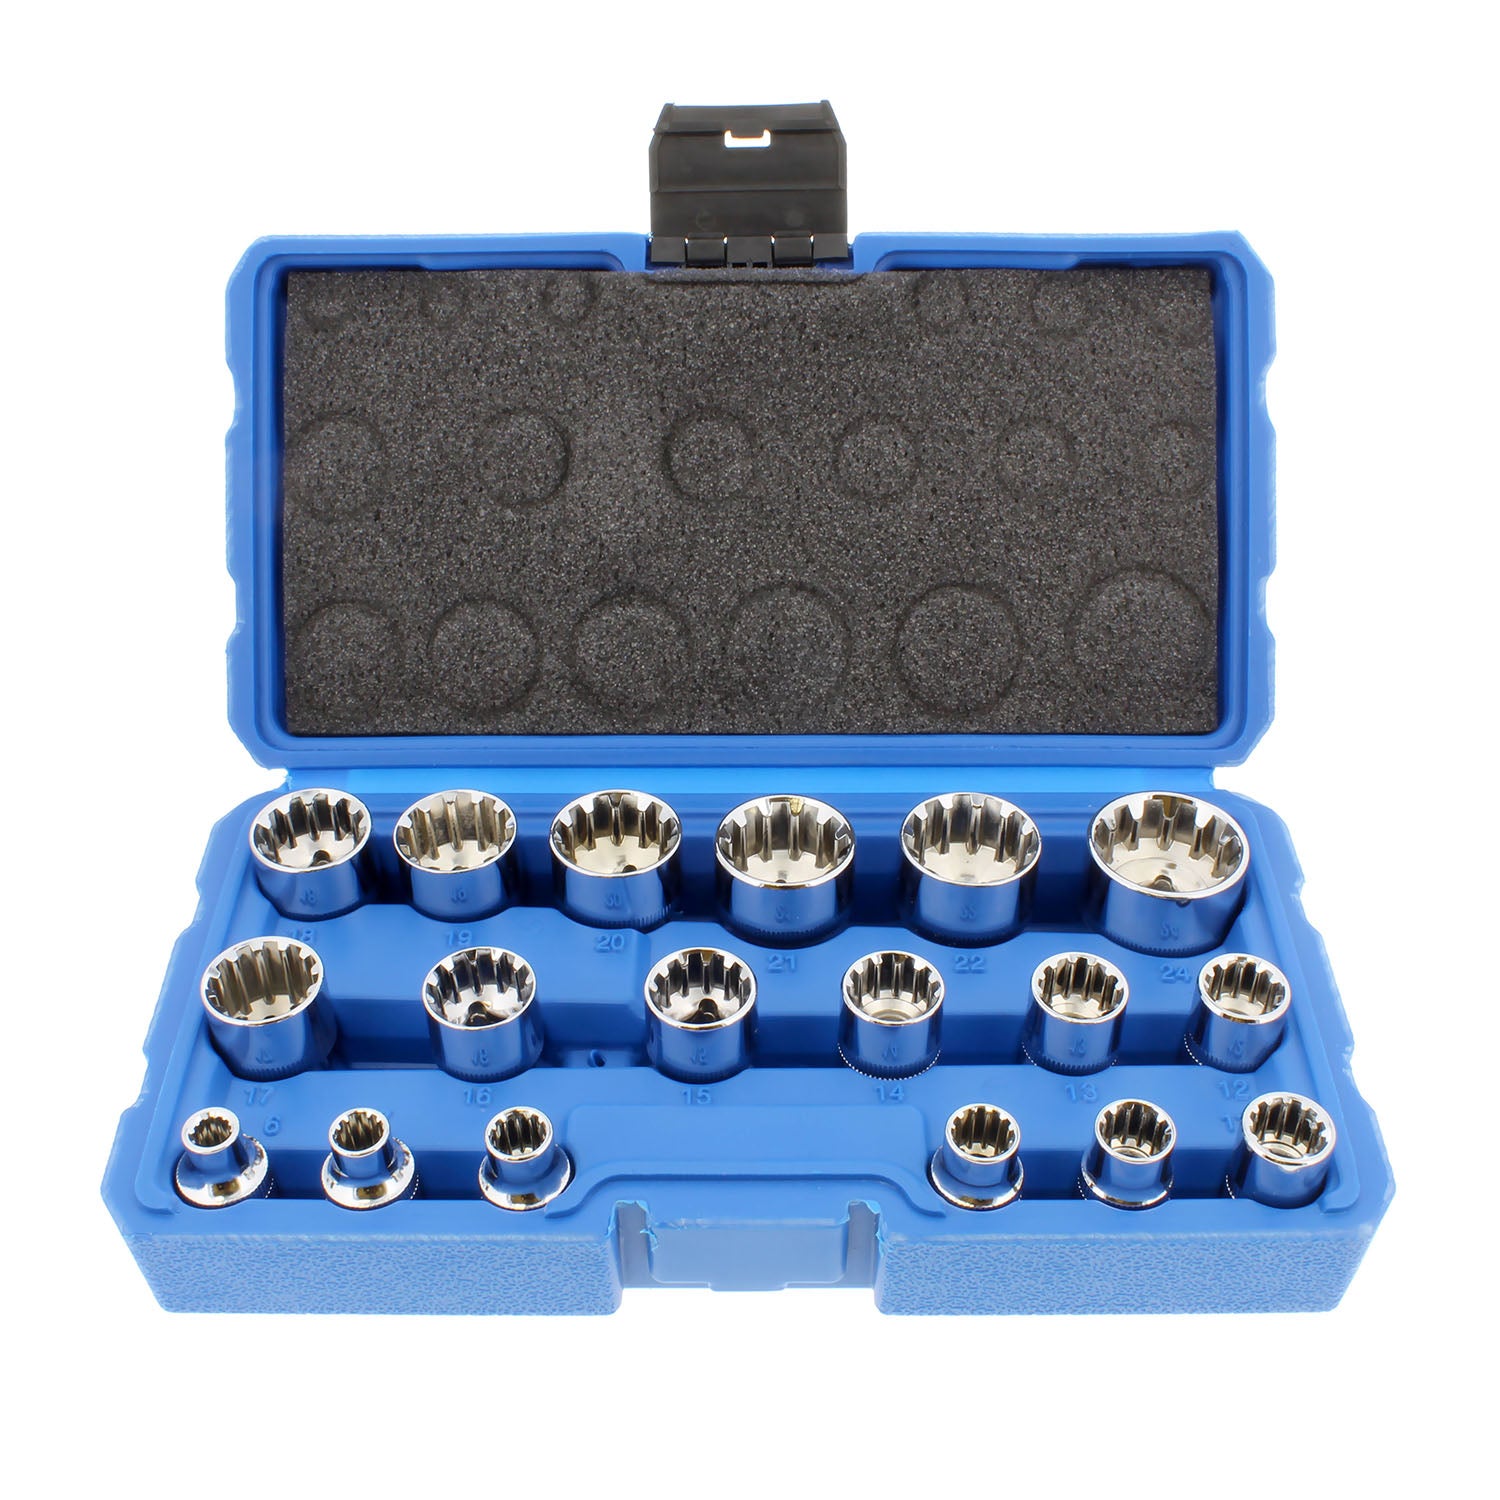 Universal Spline Socket Set – 18 Piece Metric 3/8” Drive Socket Tool